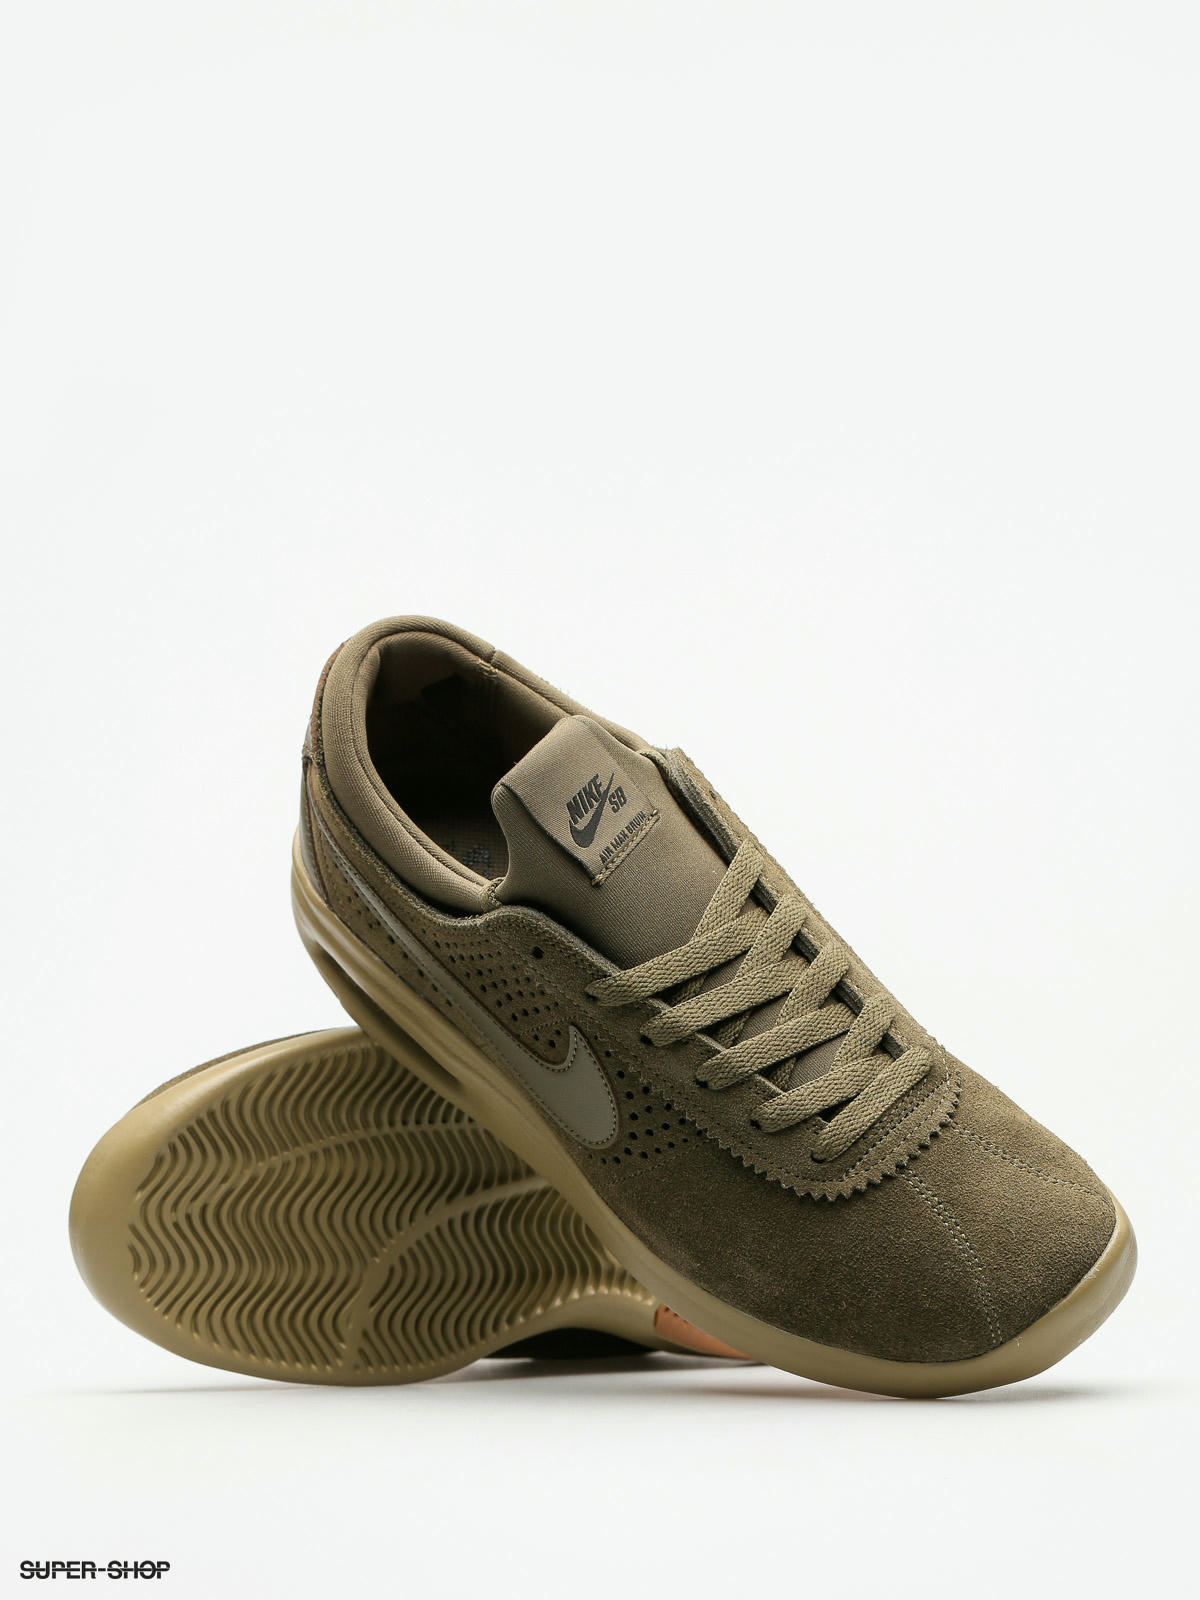 Nike SB Shoes Sb Air Max Vapor olive/medium olive olive)